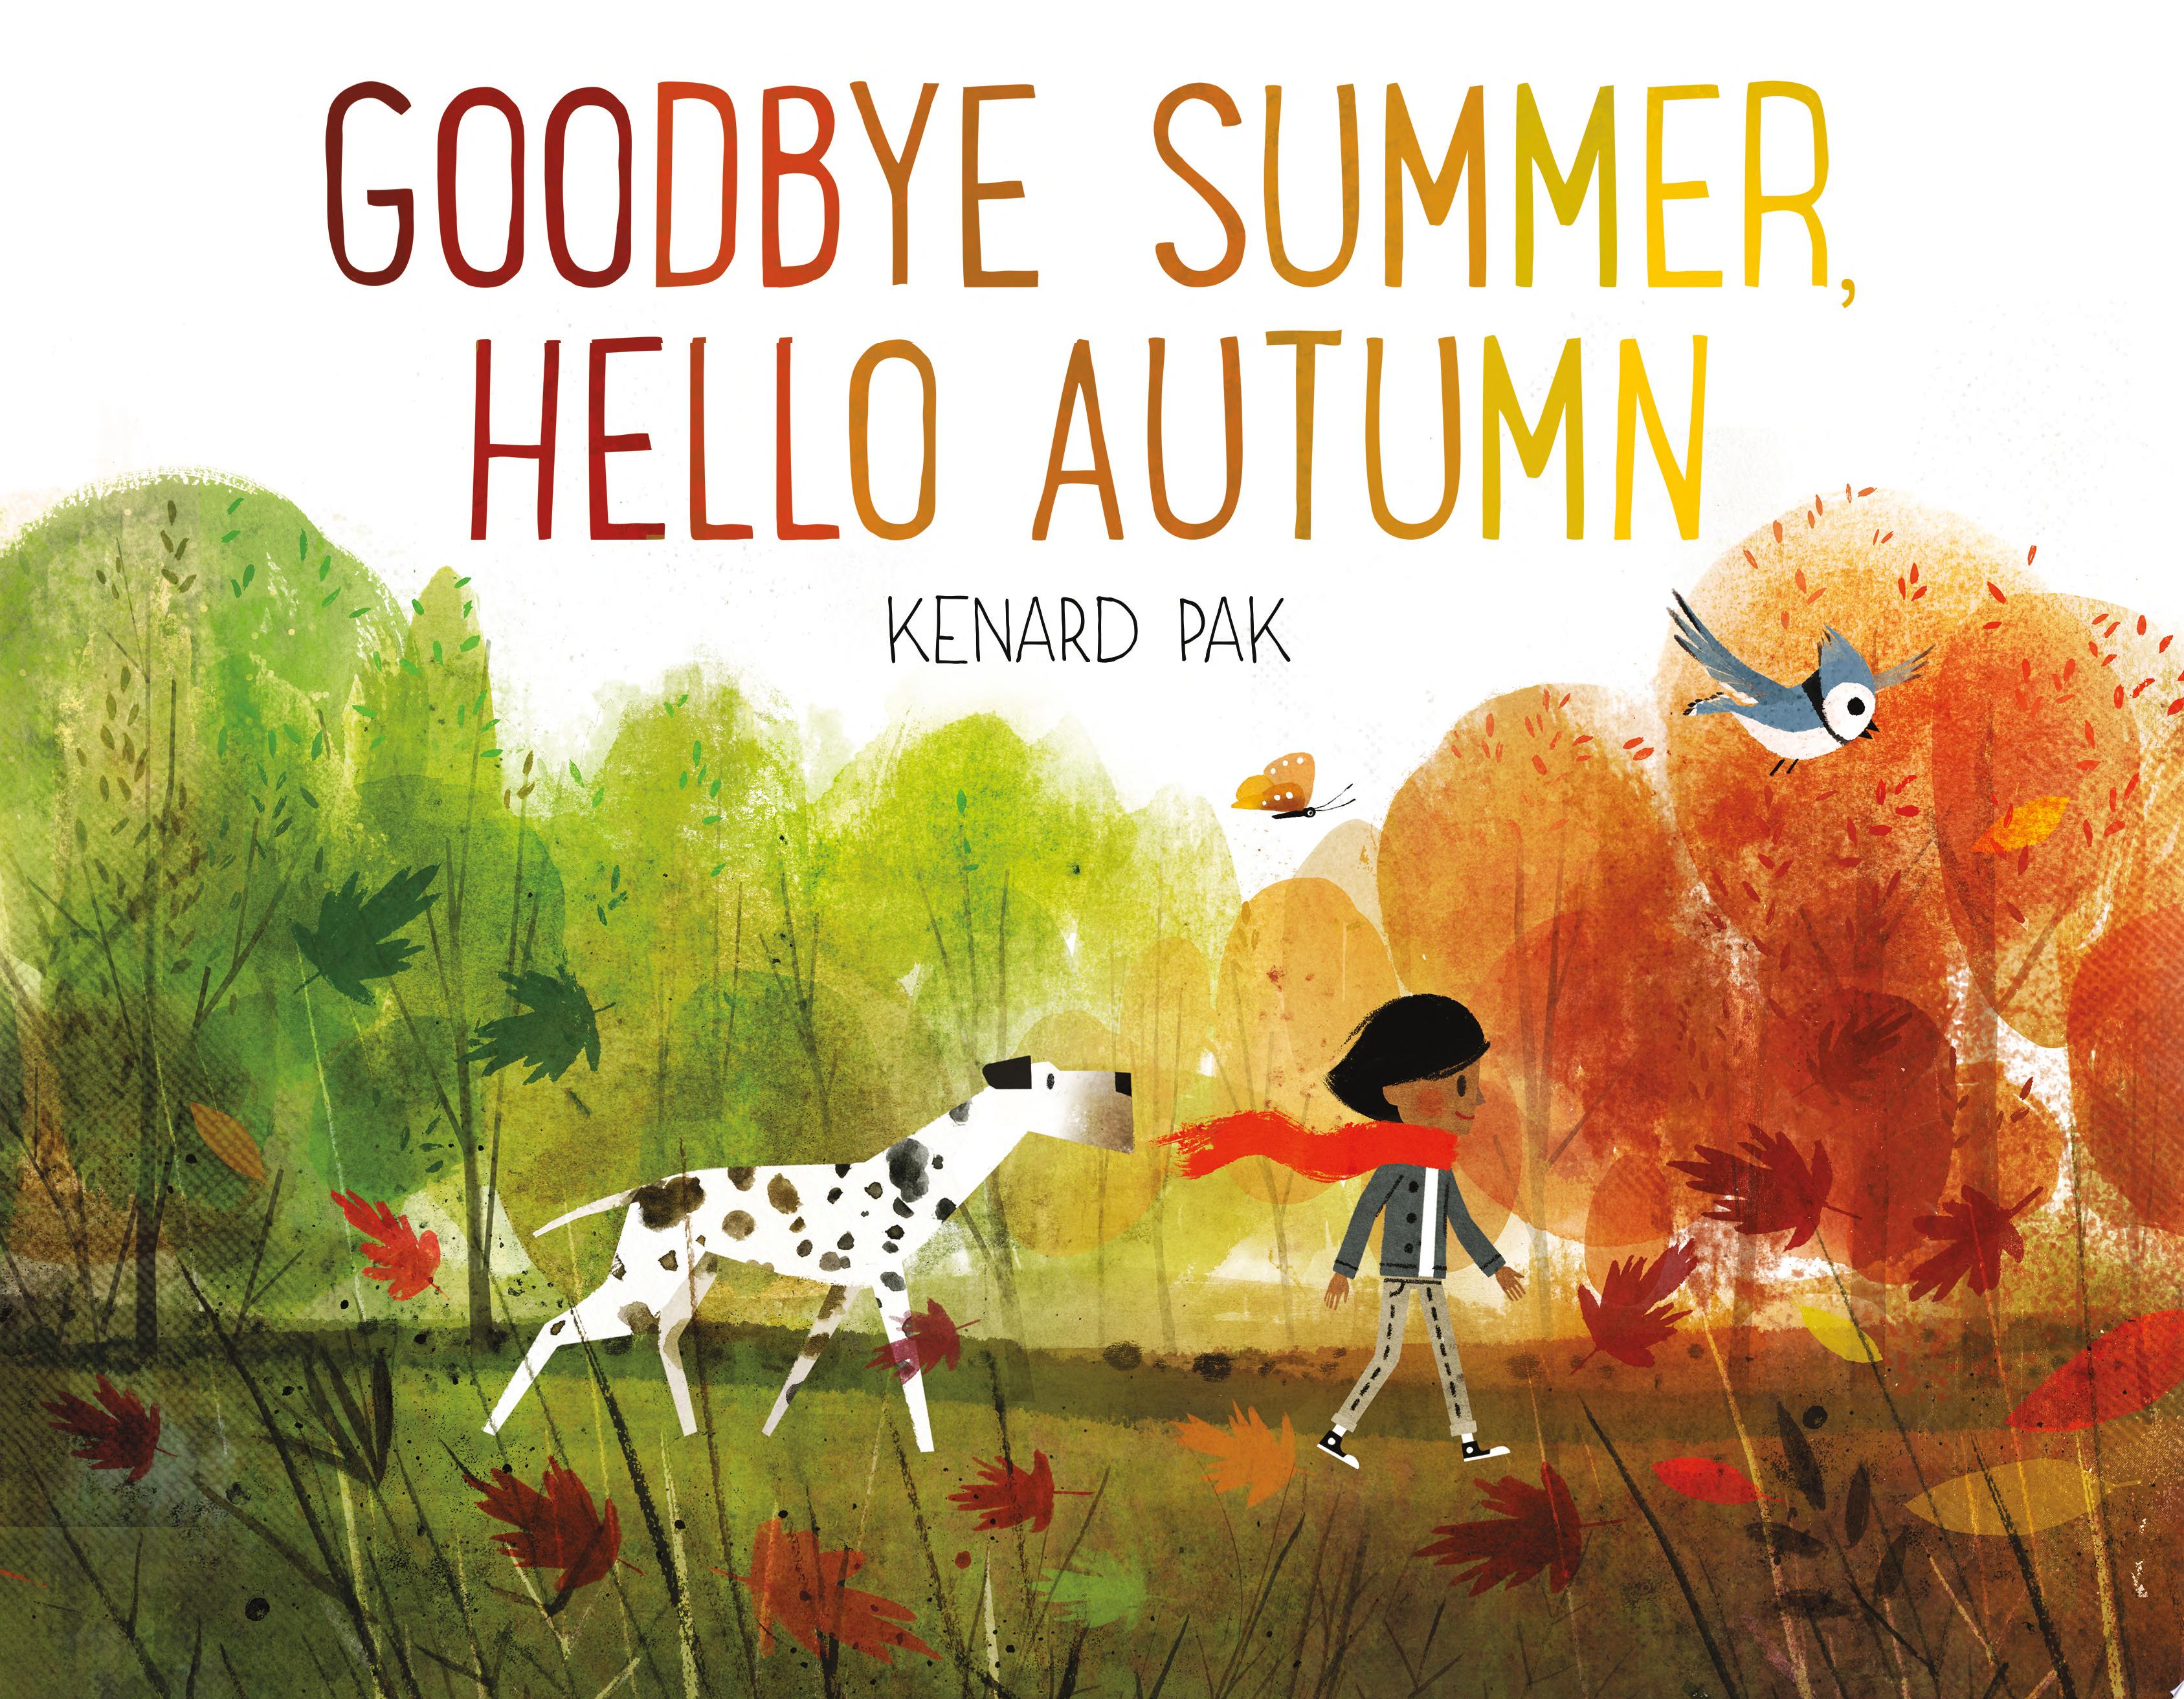 Image for "Goodbye Summer, Hello Autumn"